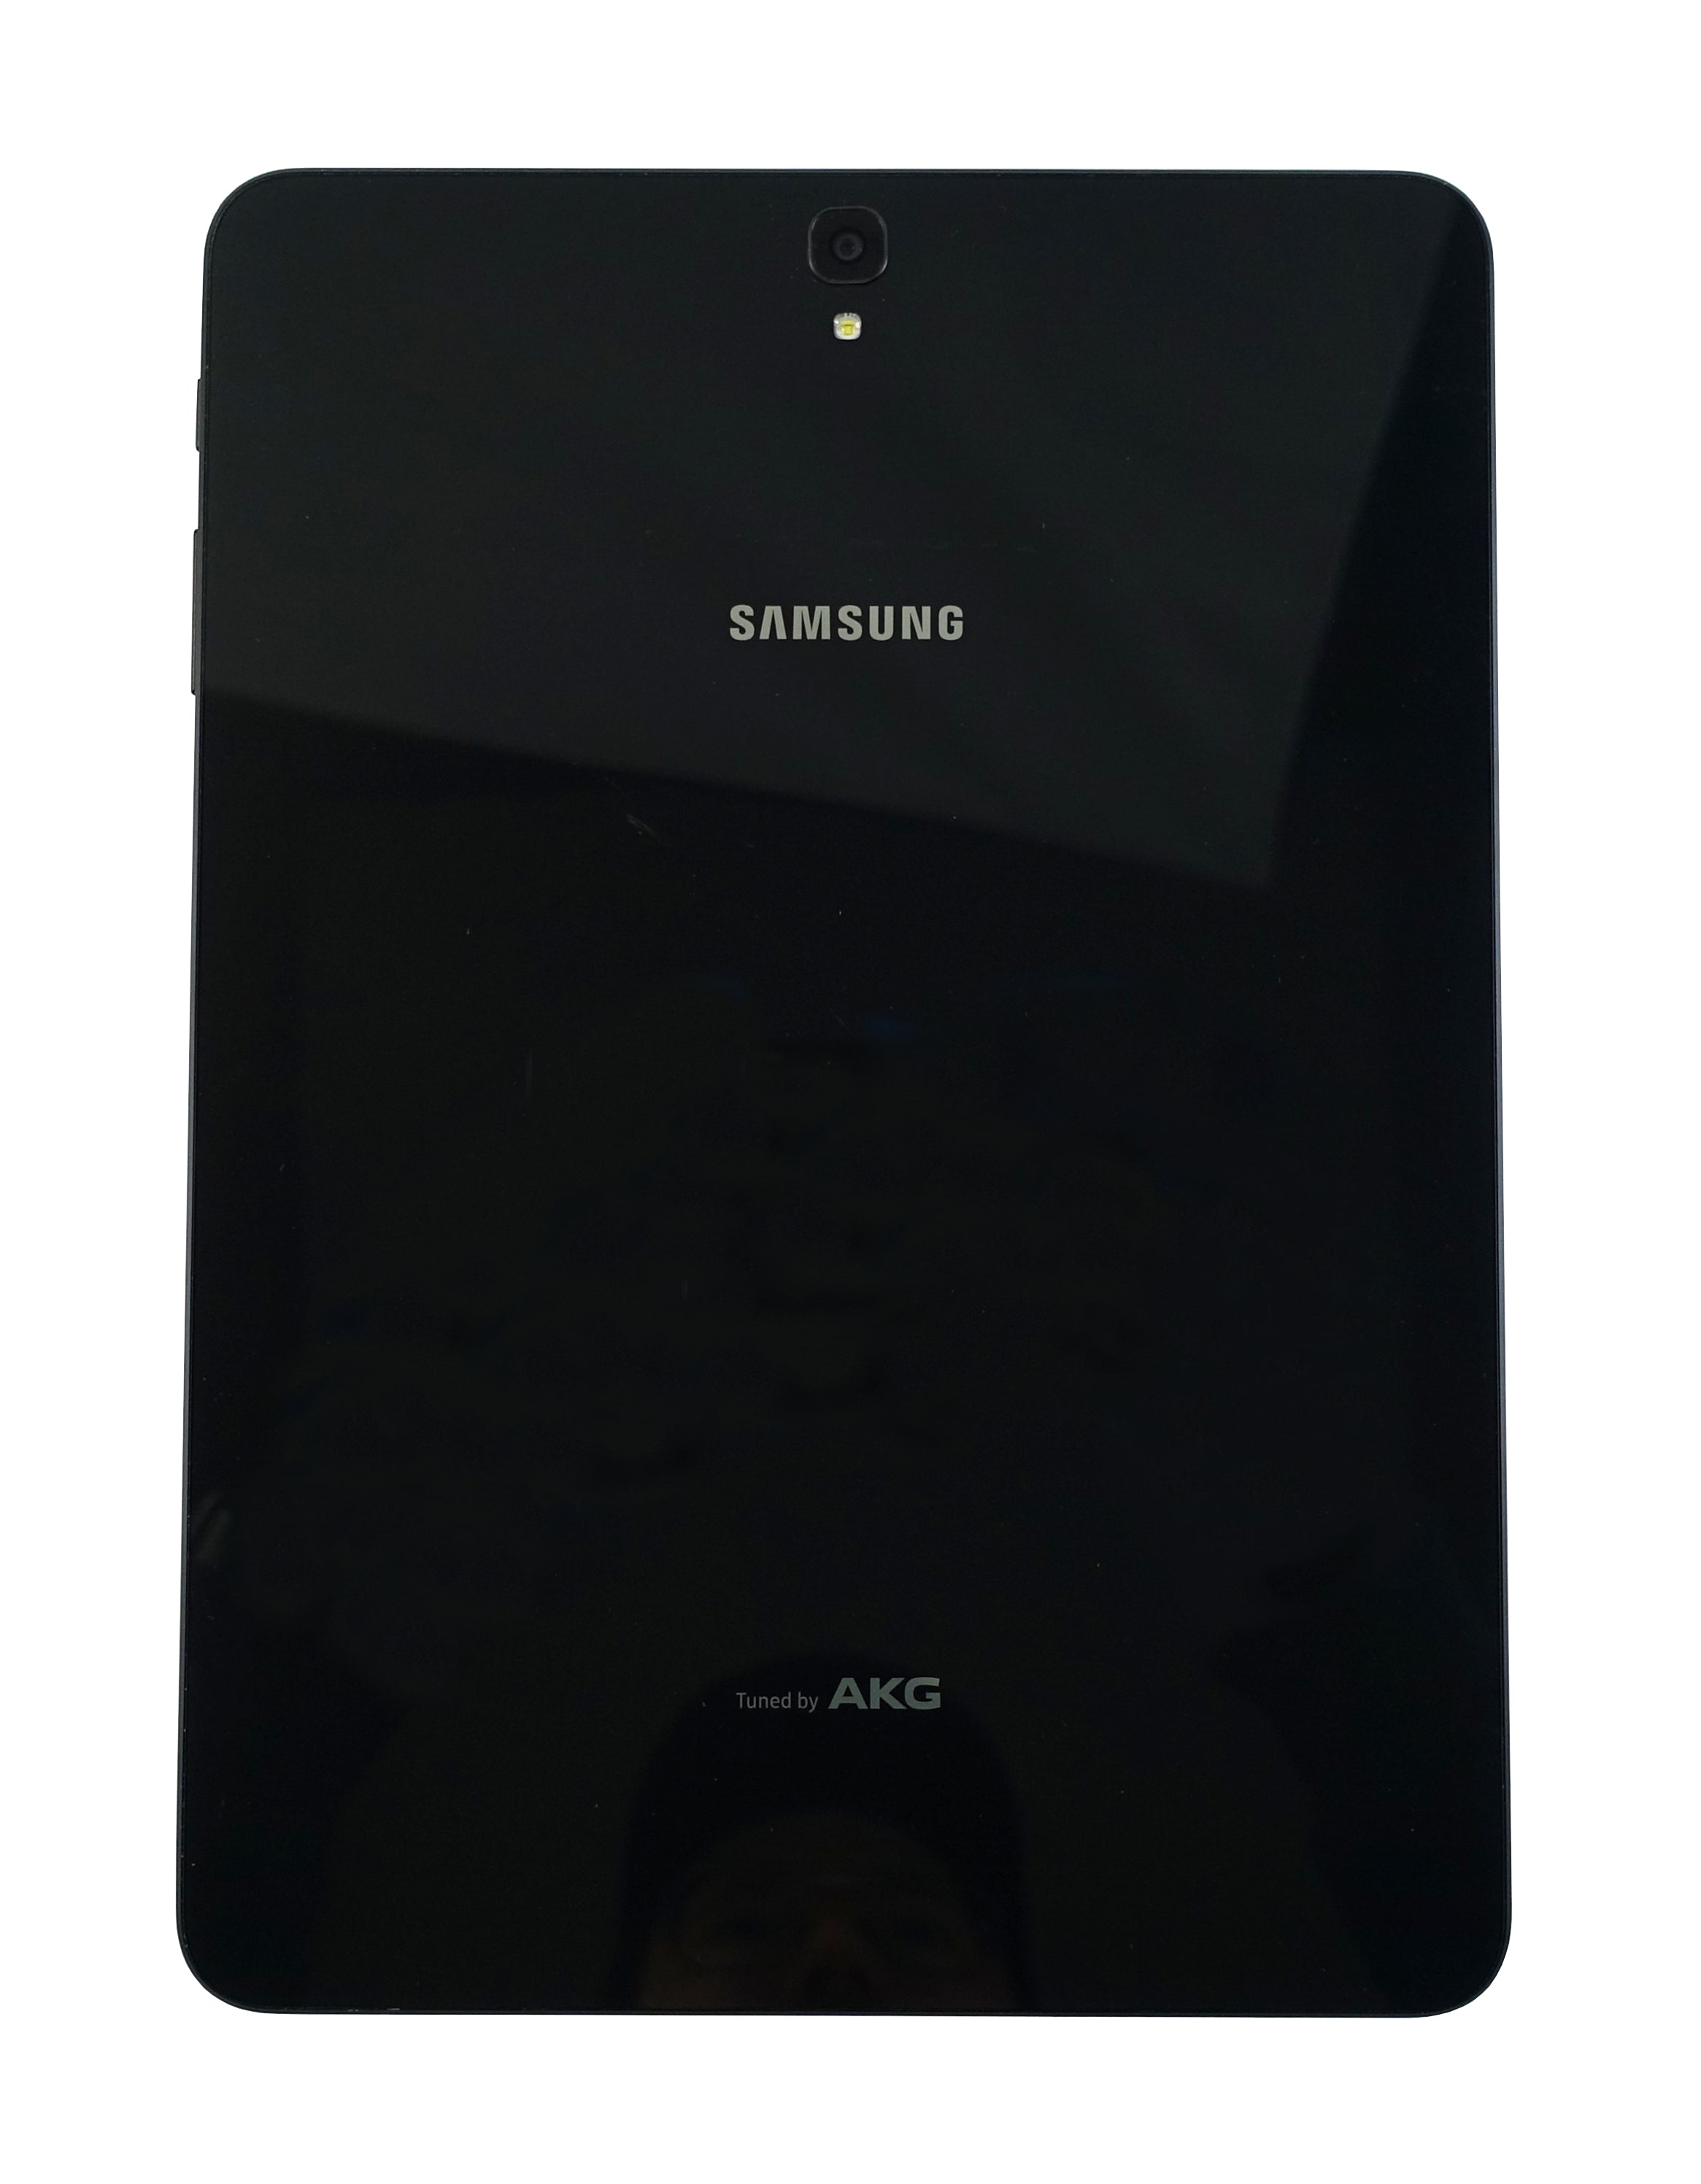 Samsung Galaxy Tab S3 Tablet, 9.7", 32GB, WiFi, Black, SM-T820